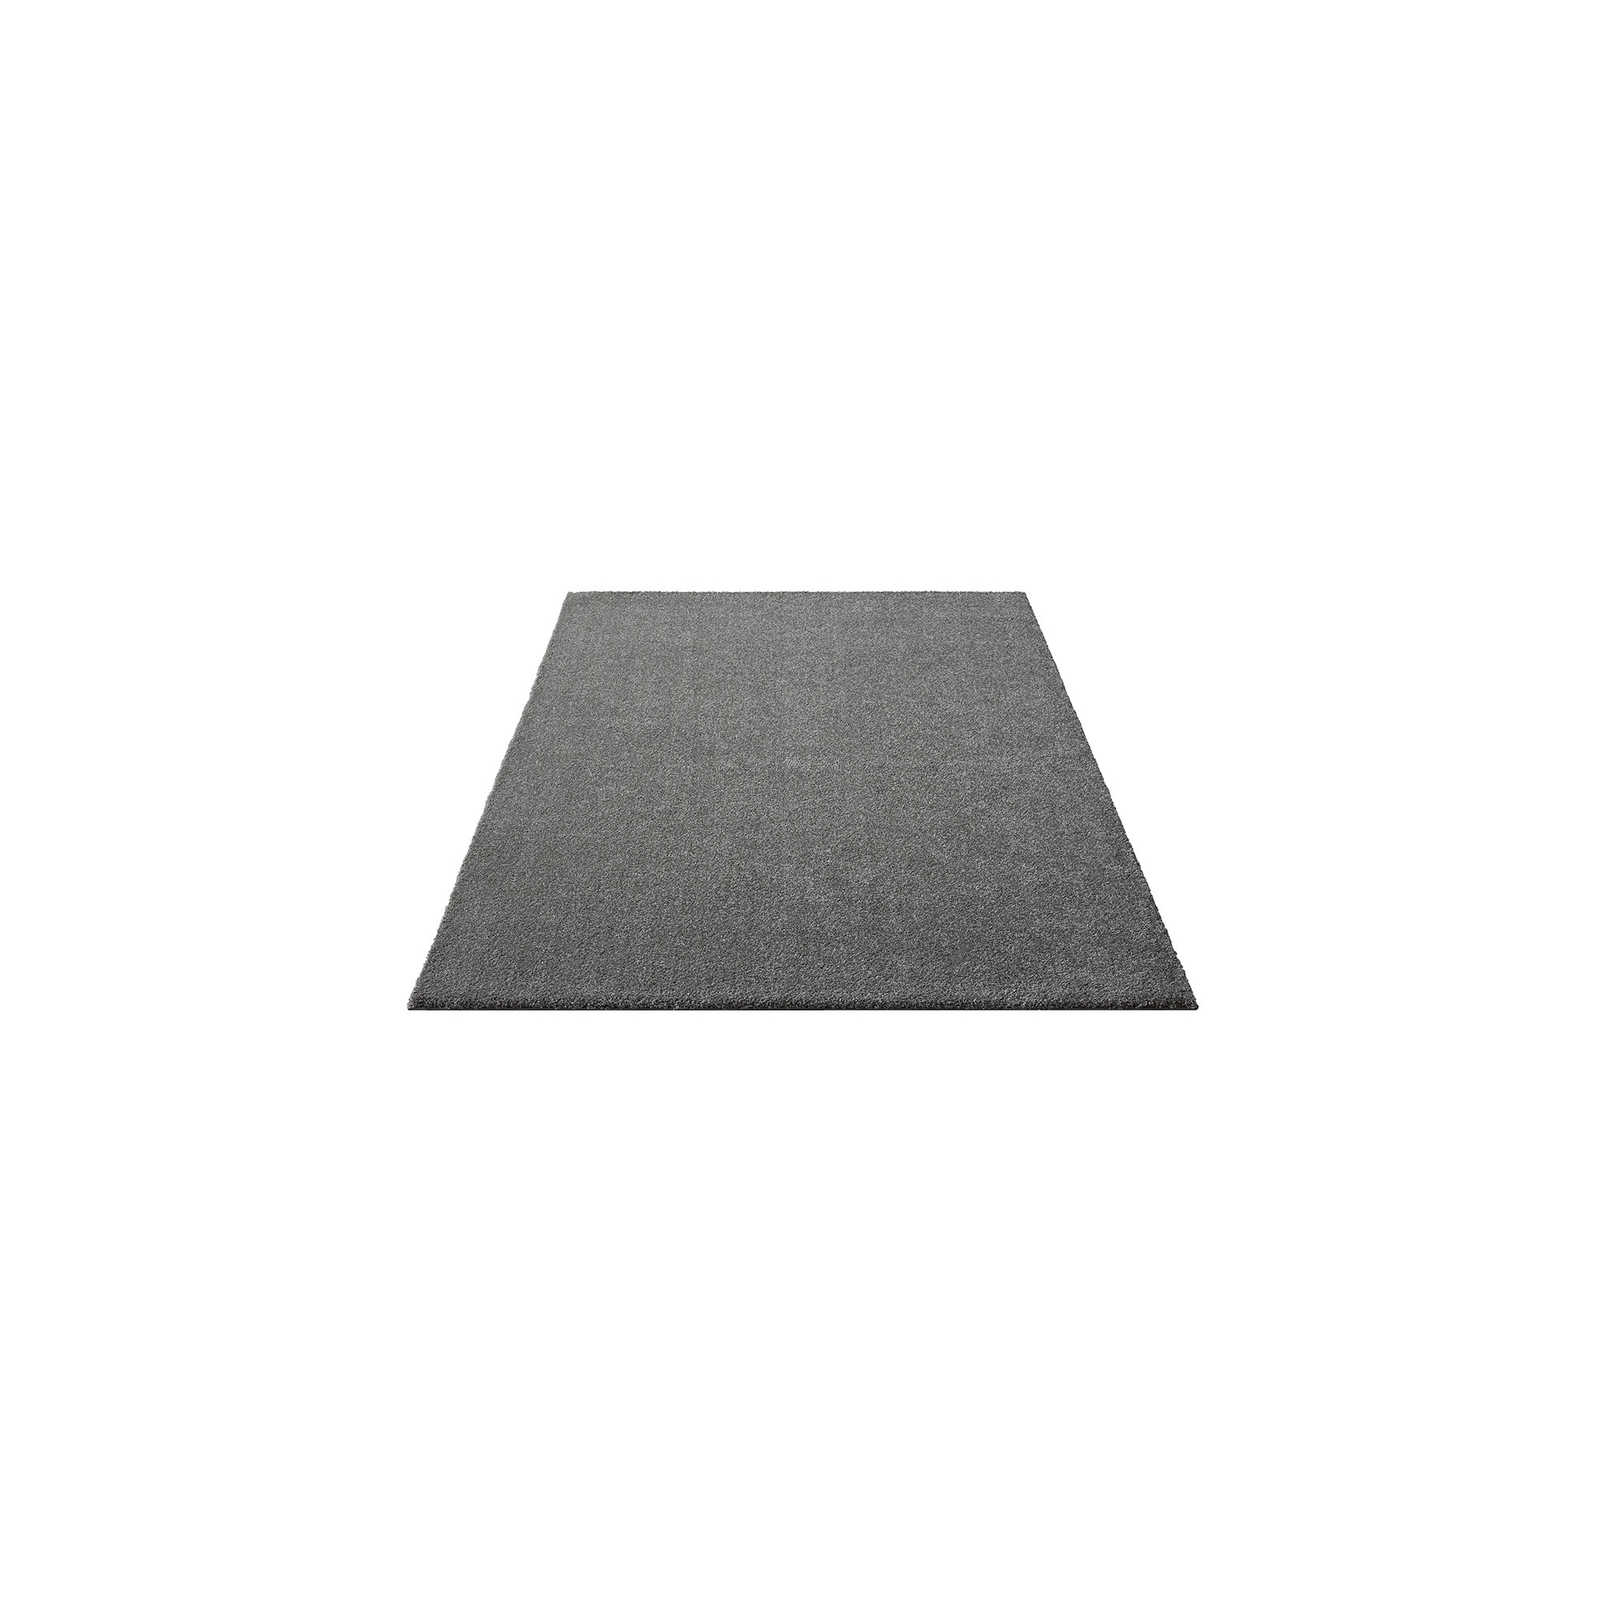 Fluffy short pile carpet in grey - 150 x 80 cm
